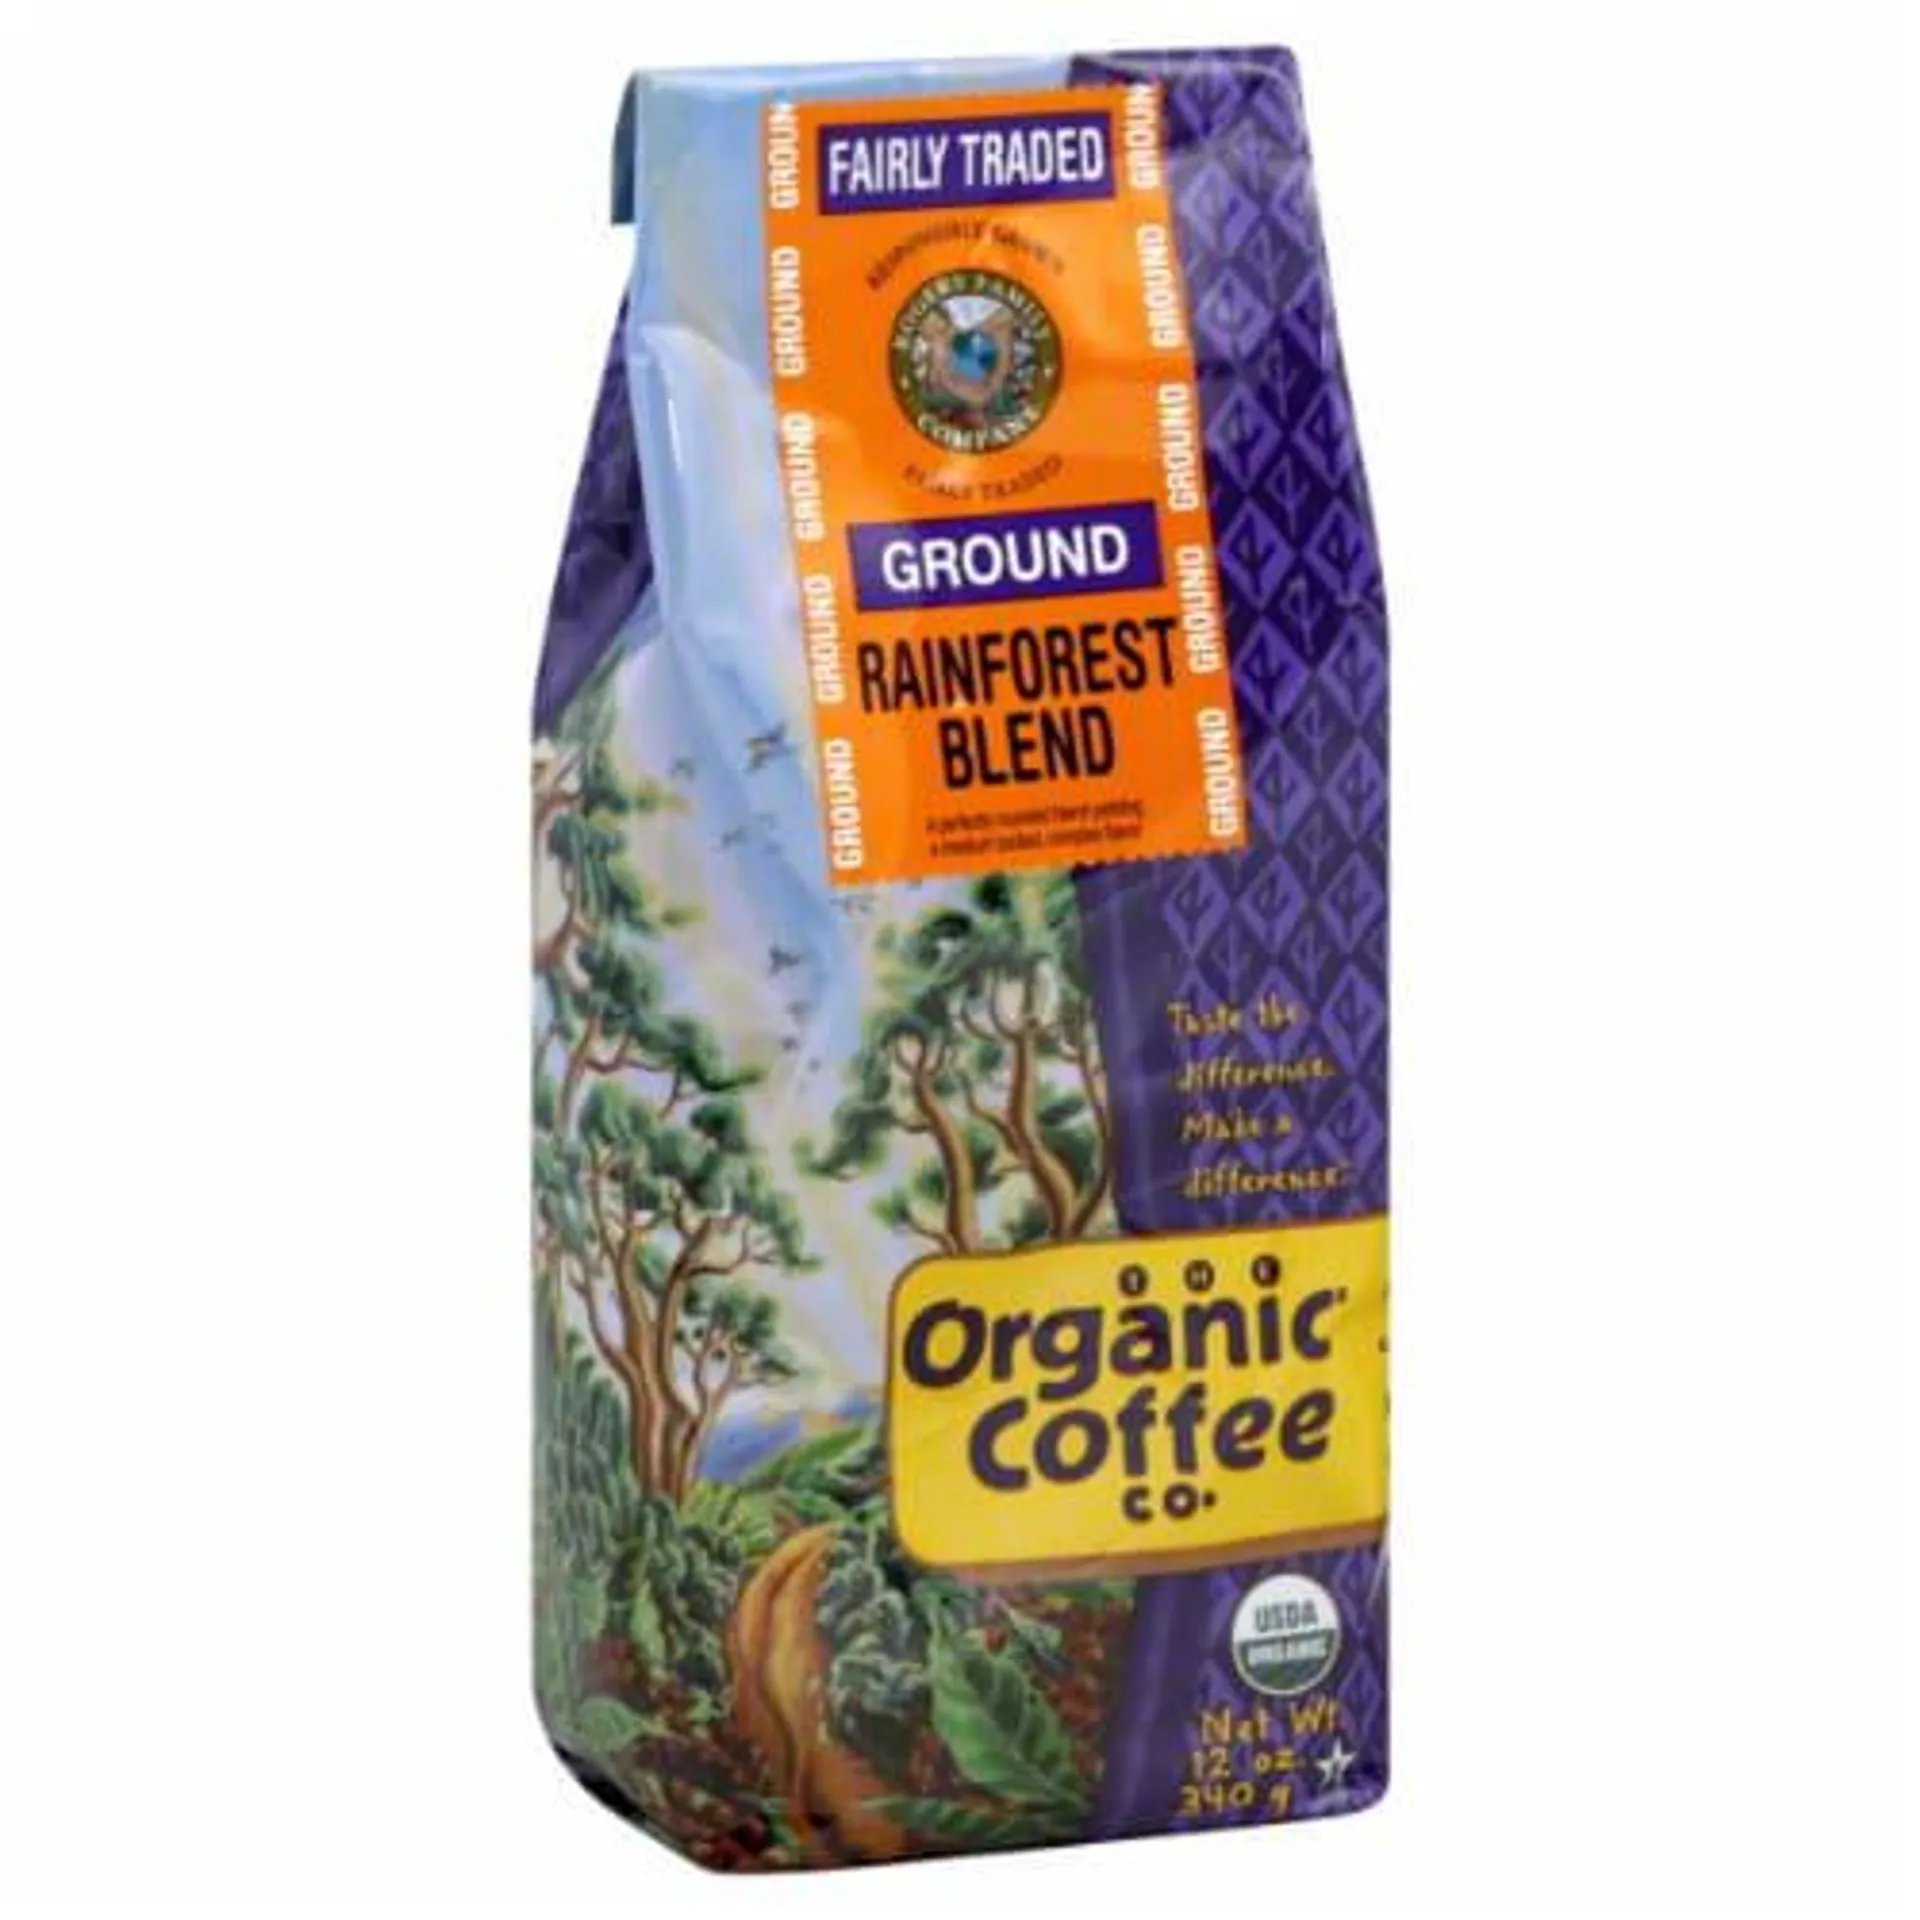 The Organic Coffee Co. Rainforest Blend